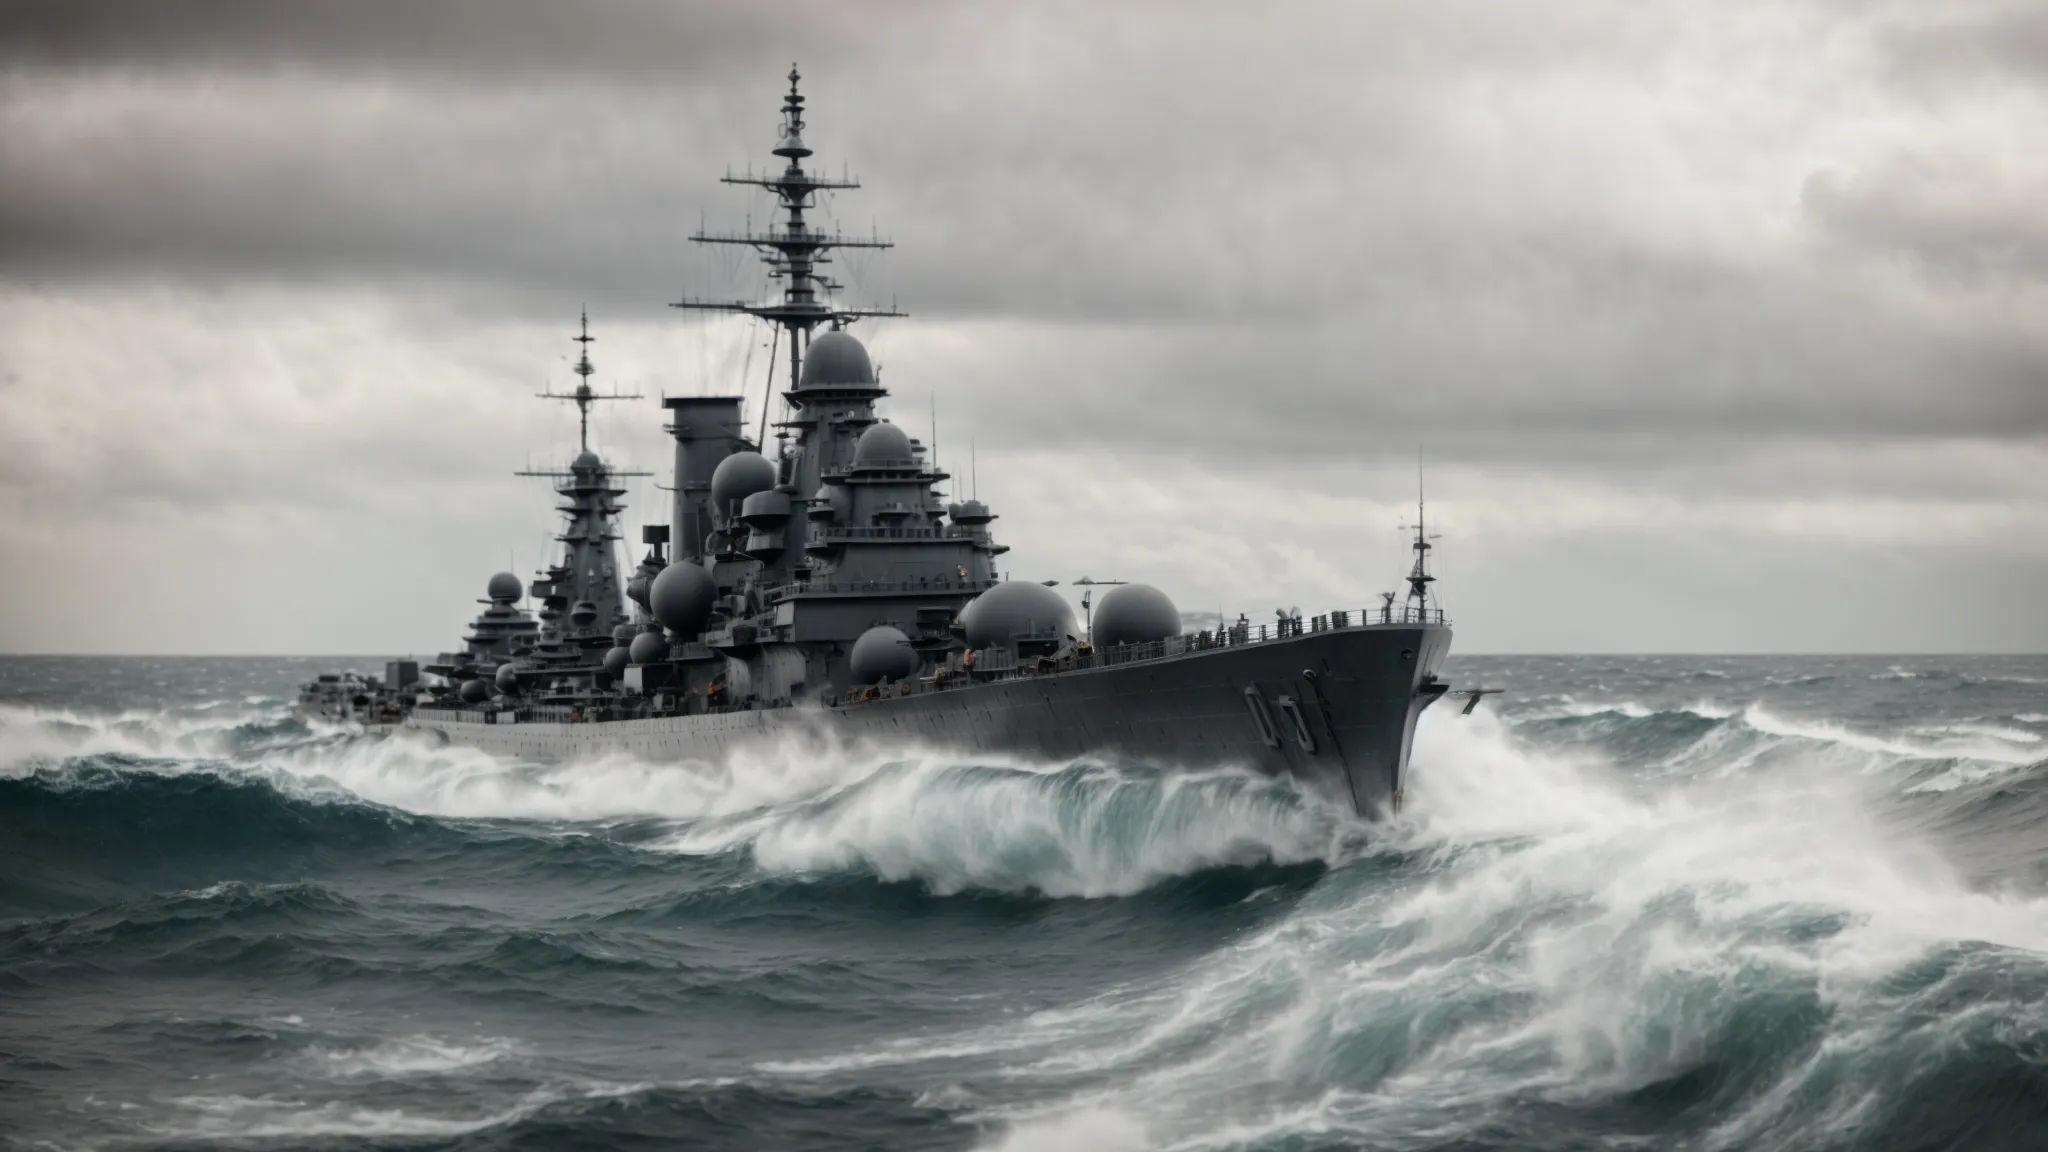 a vintage naval battleship braves turbulent ocean waves under a cloudy sky.